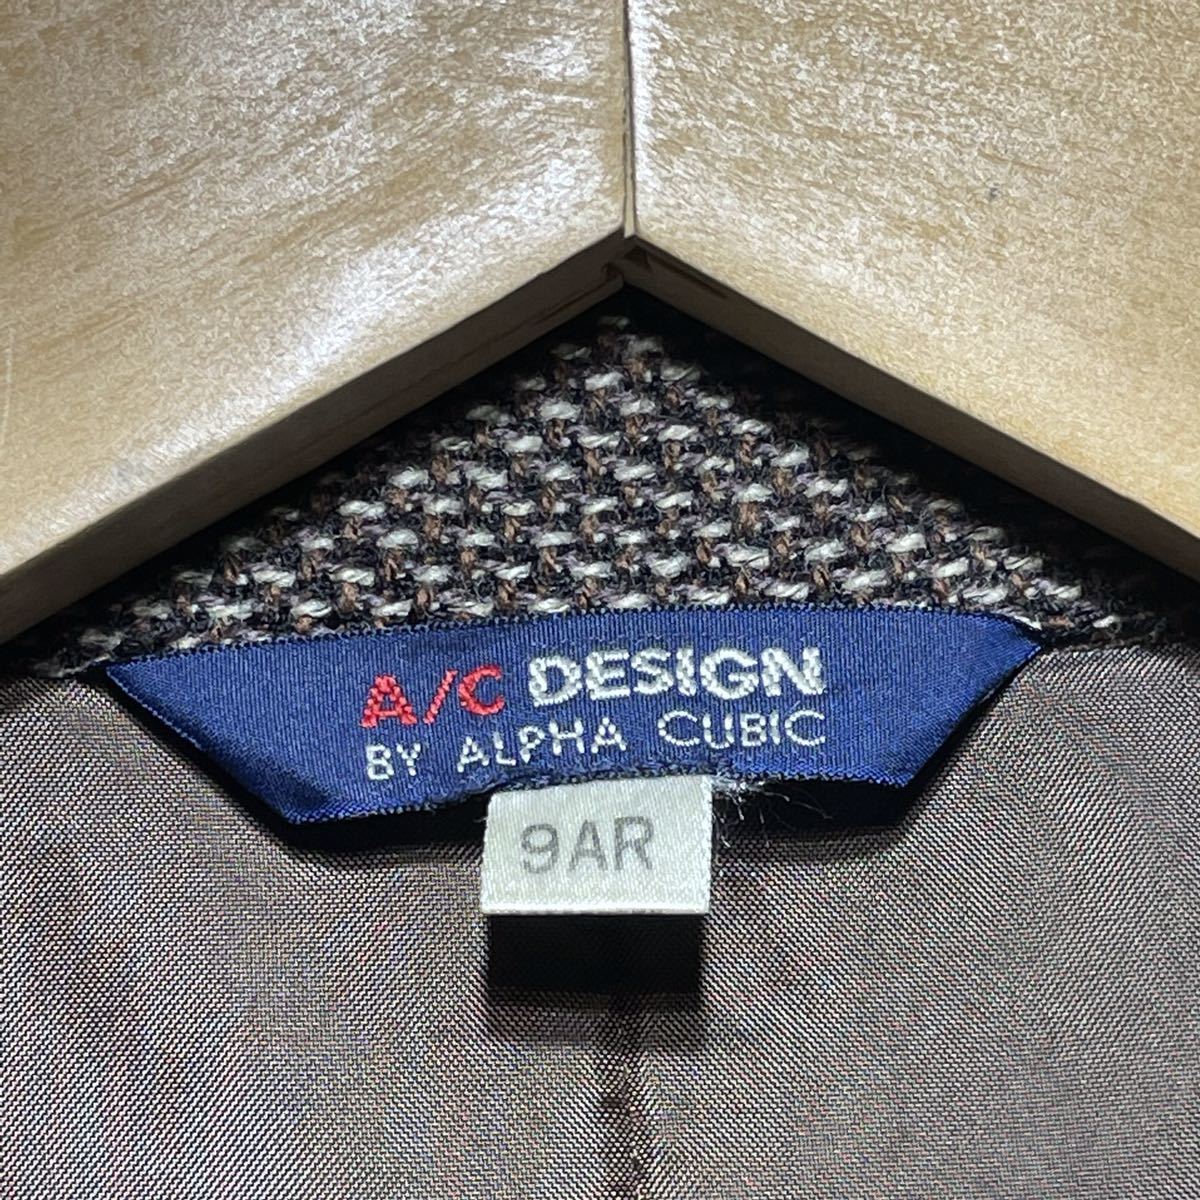 A/C DESIGN BY ALPHA CUBICe-si- vial fa Cubic coat size 9AR